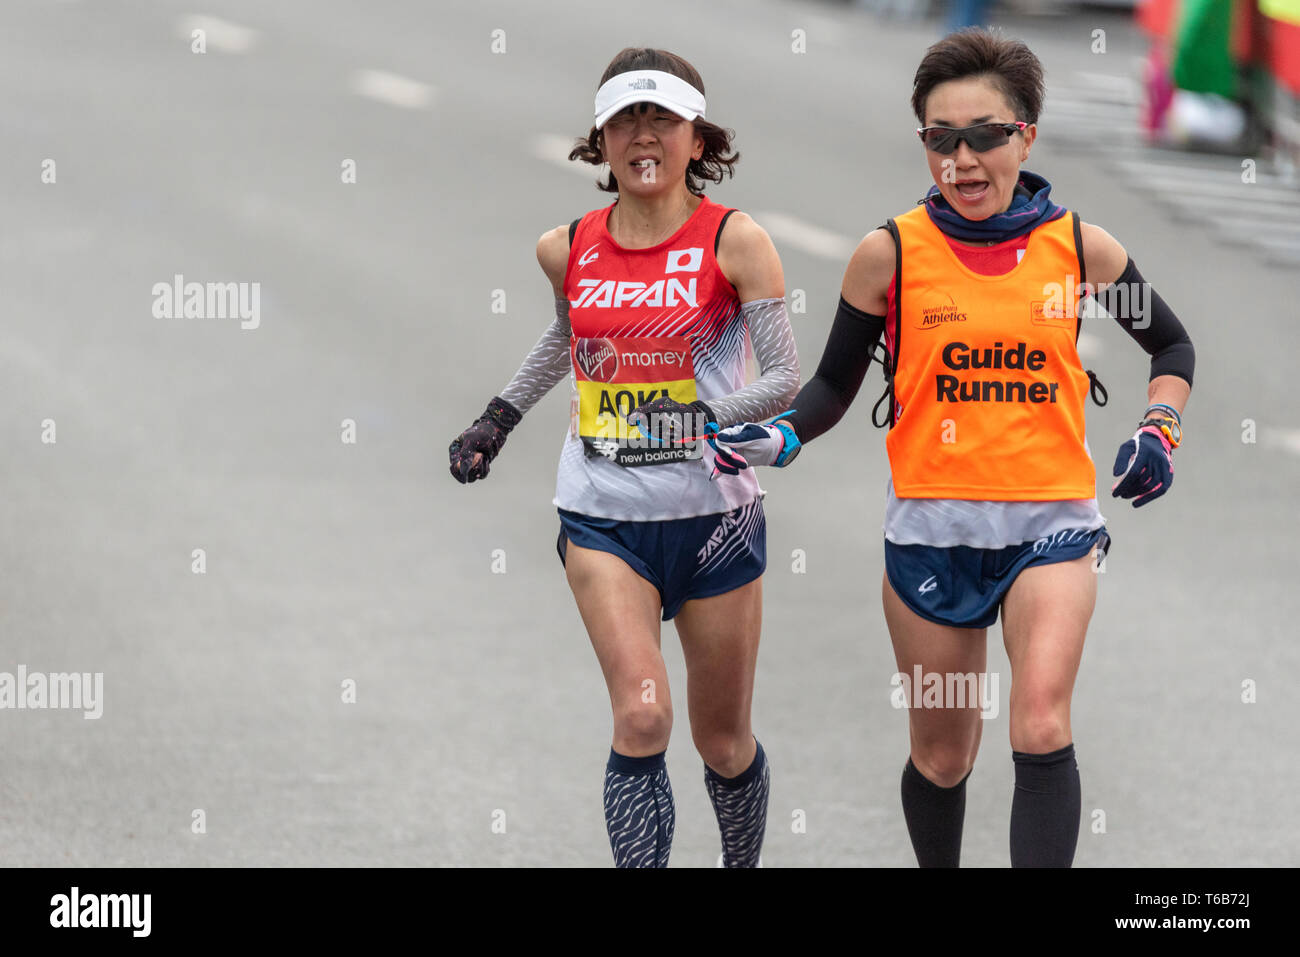 Aoki of Japan racing in the Virgin Money London Marathon 2019 near Tower Bridge, London, UK Stock Photo